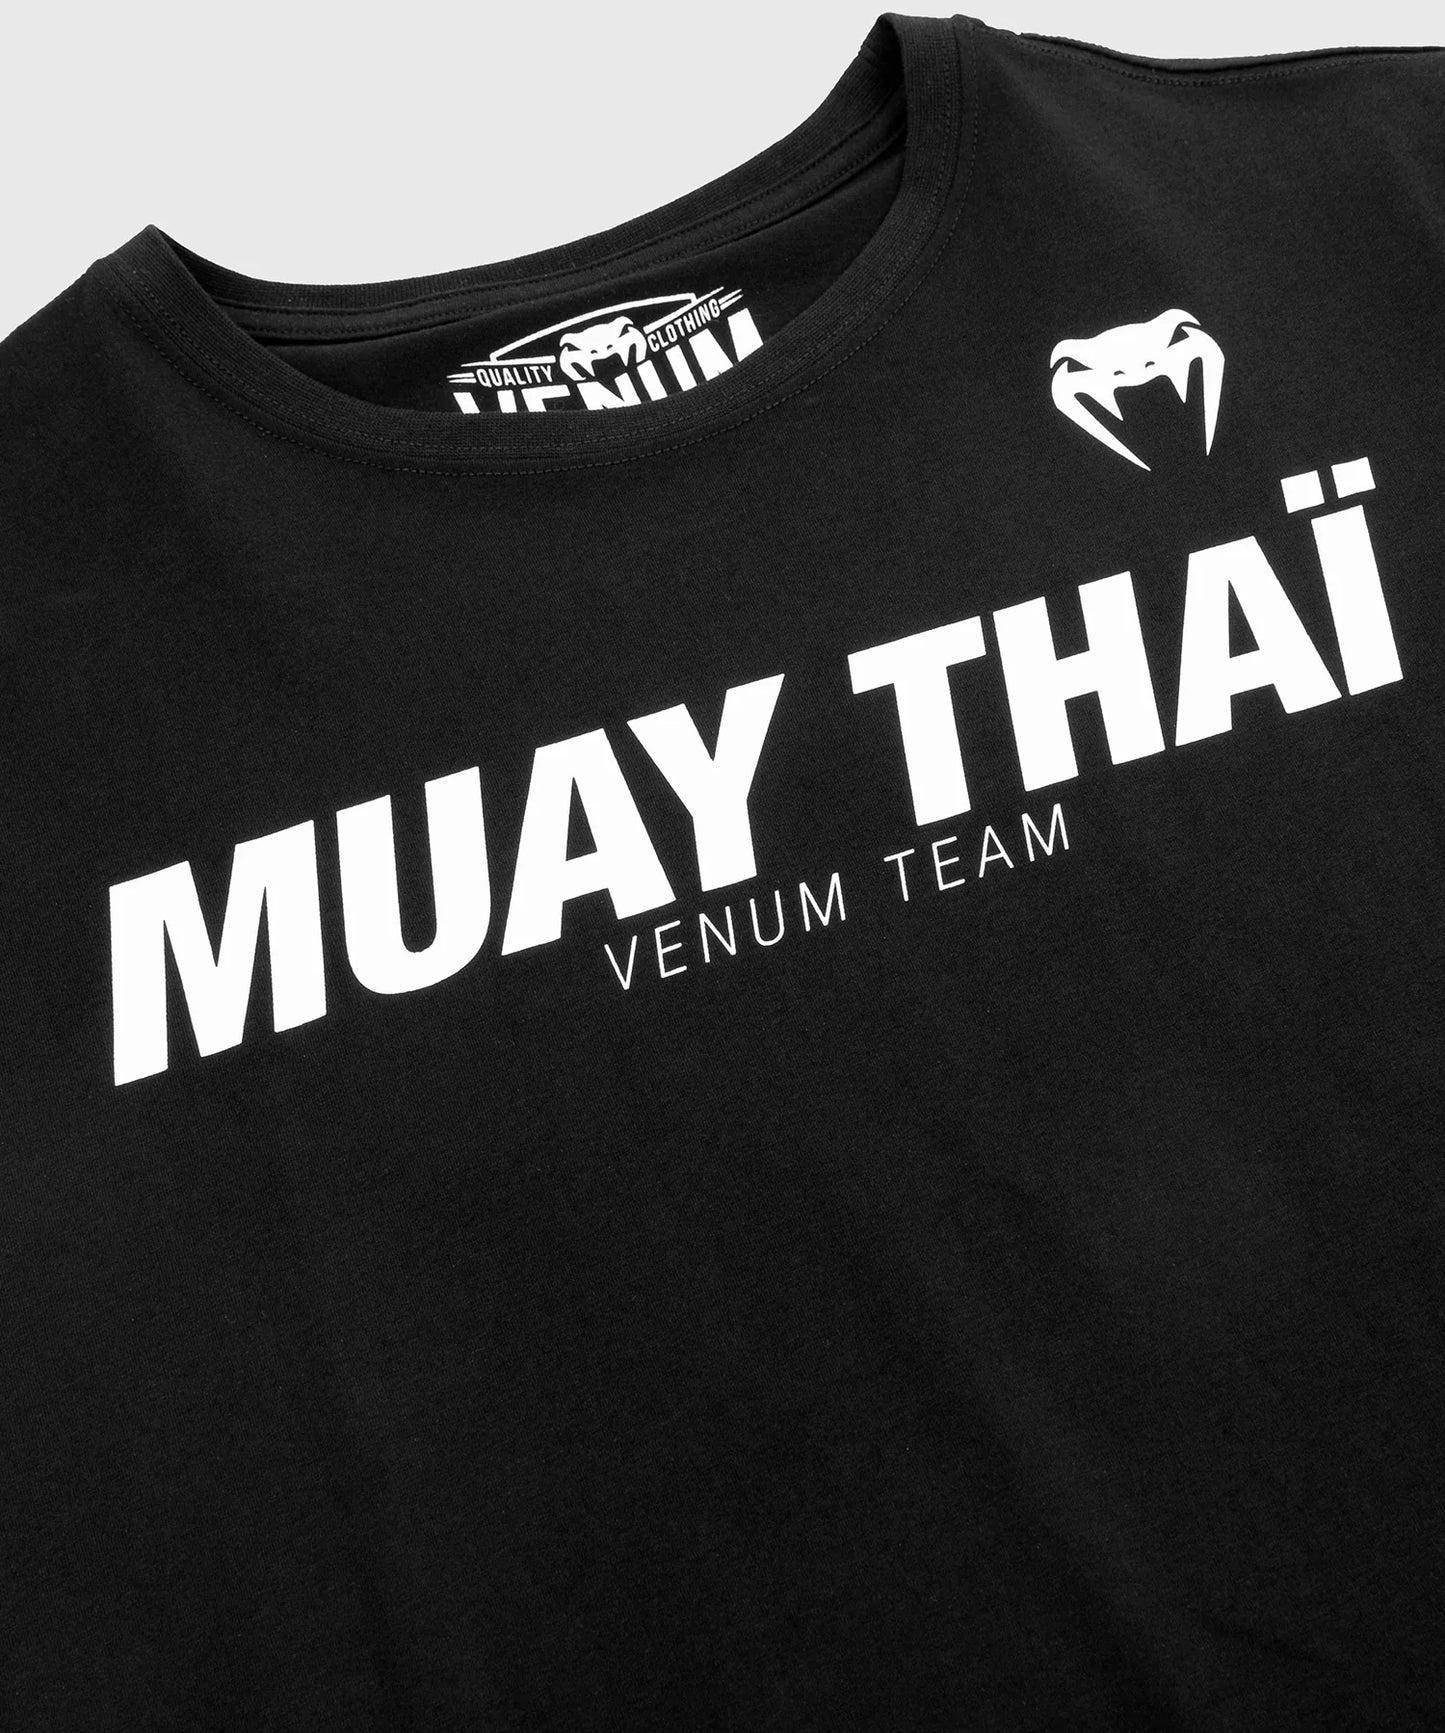 T-SHIRT VENUM MUAY THAI VT